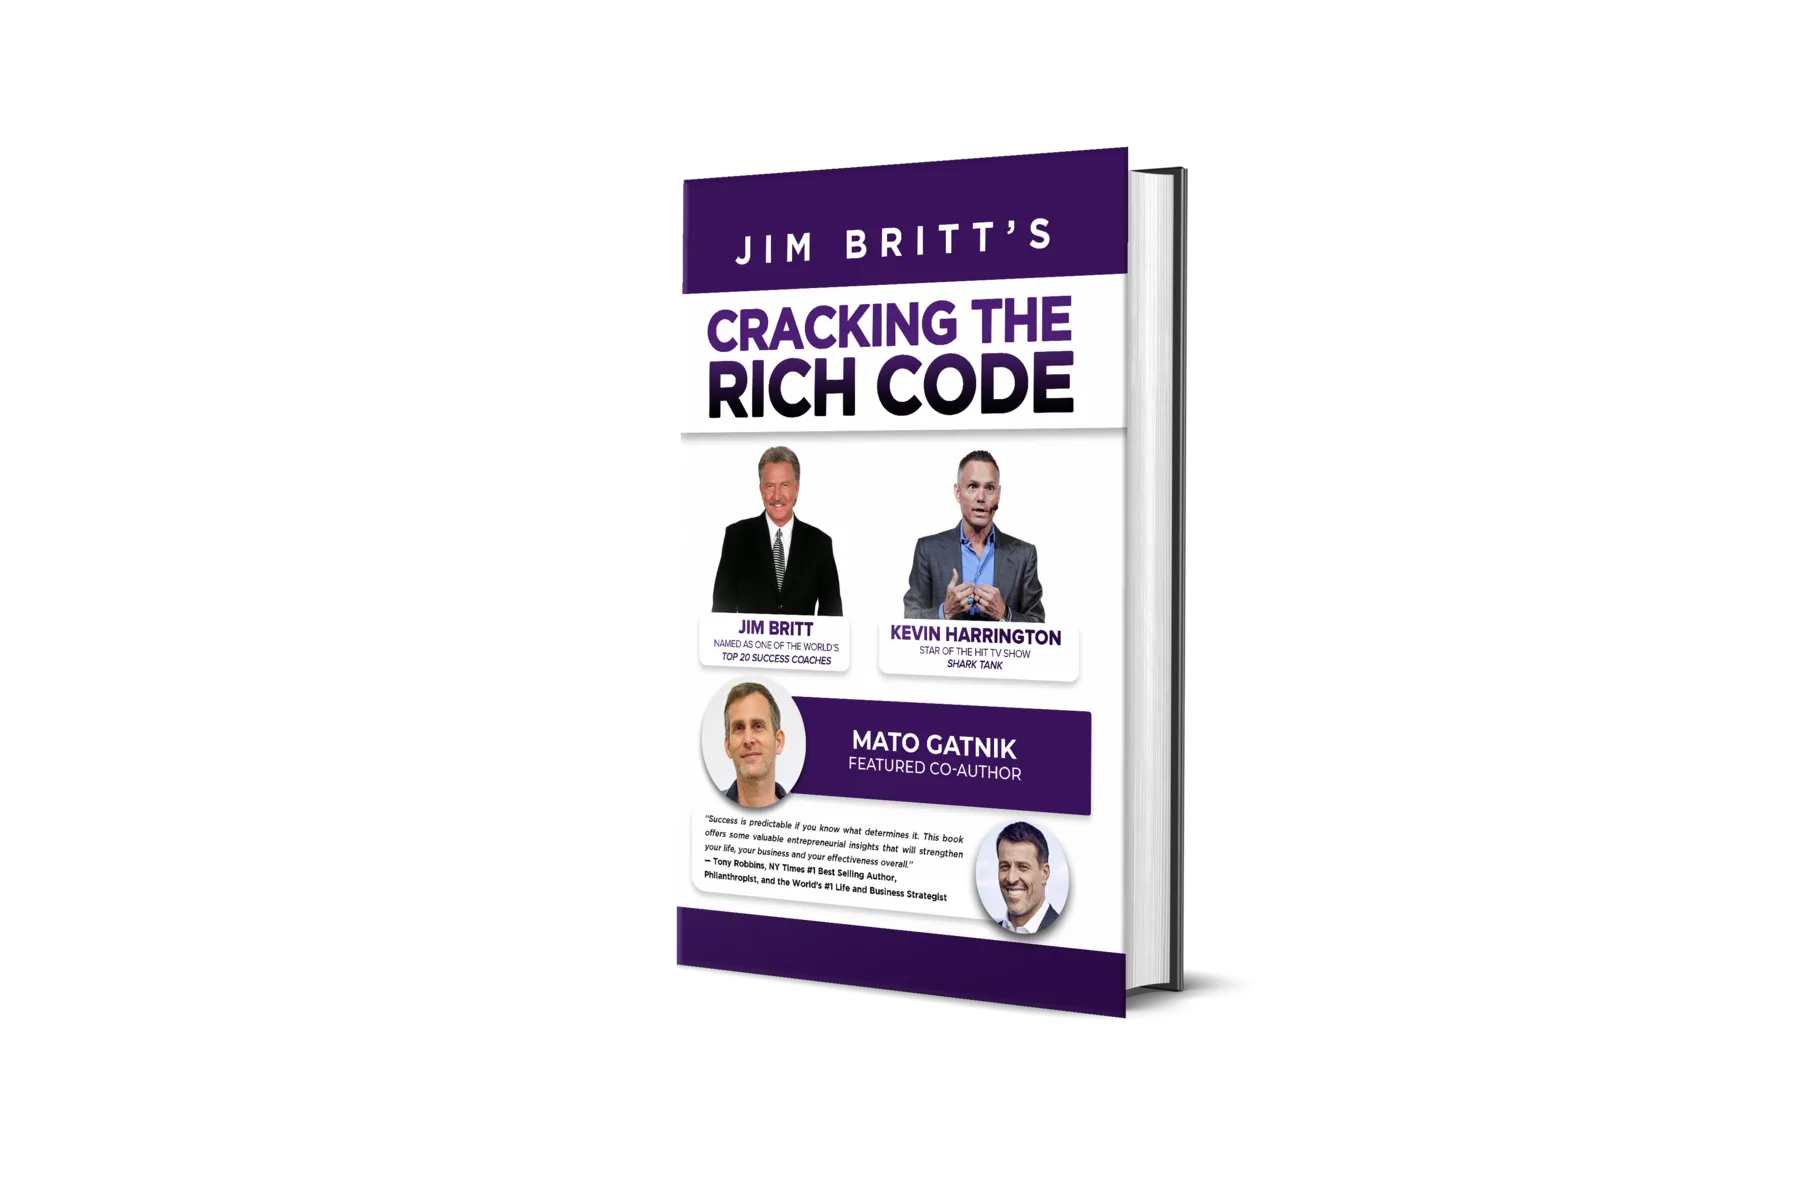 Cracking the Rich Code v.5 book coauthored by Mato Gatnik